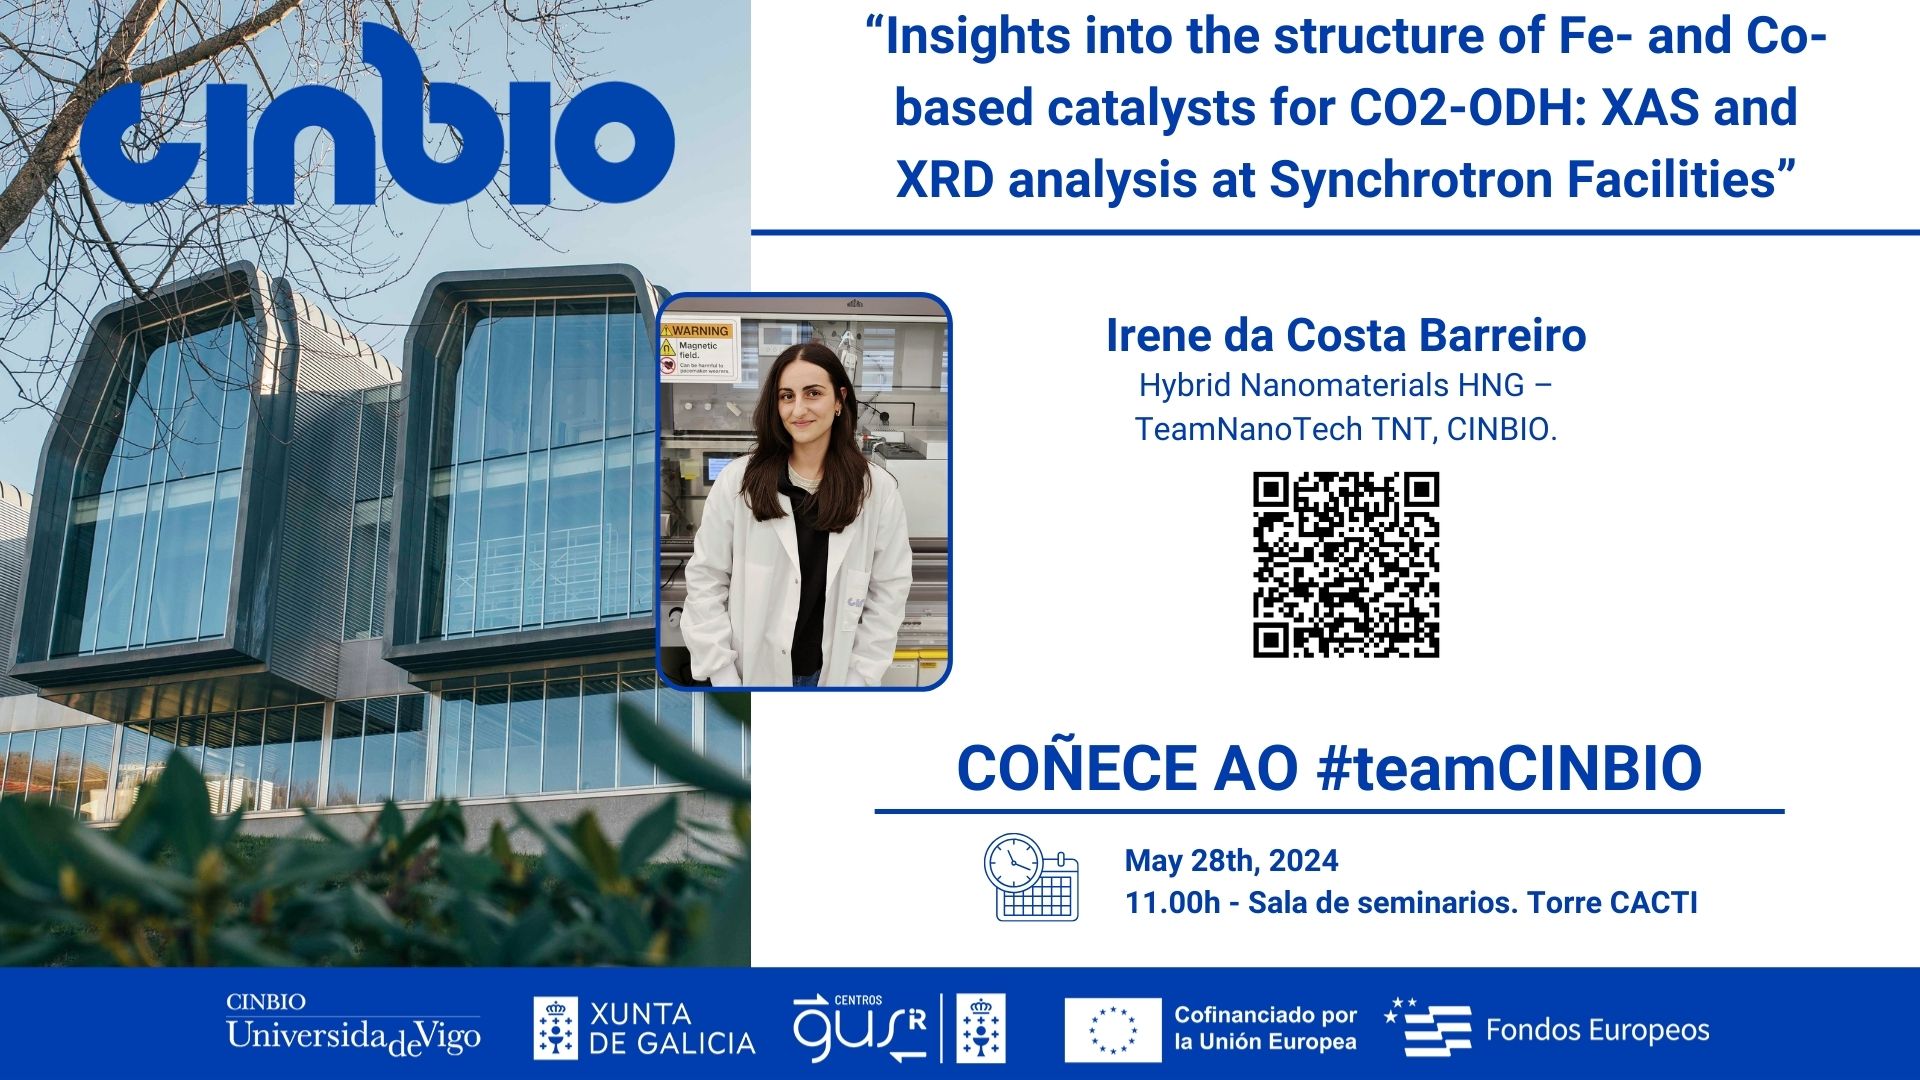 Coñece ao #teamCINBIO: Irene da Costa Barreiro